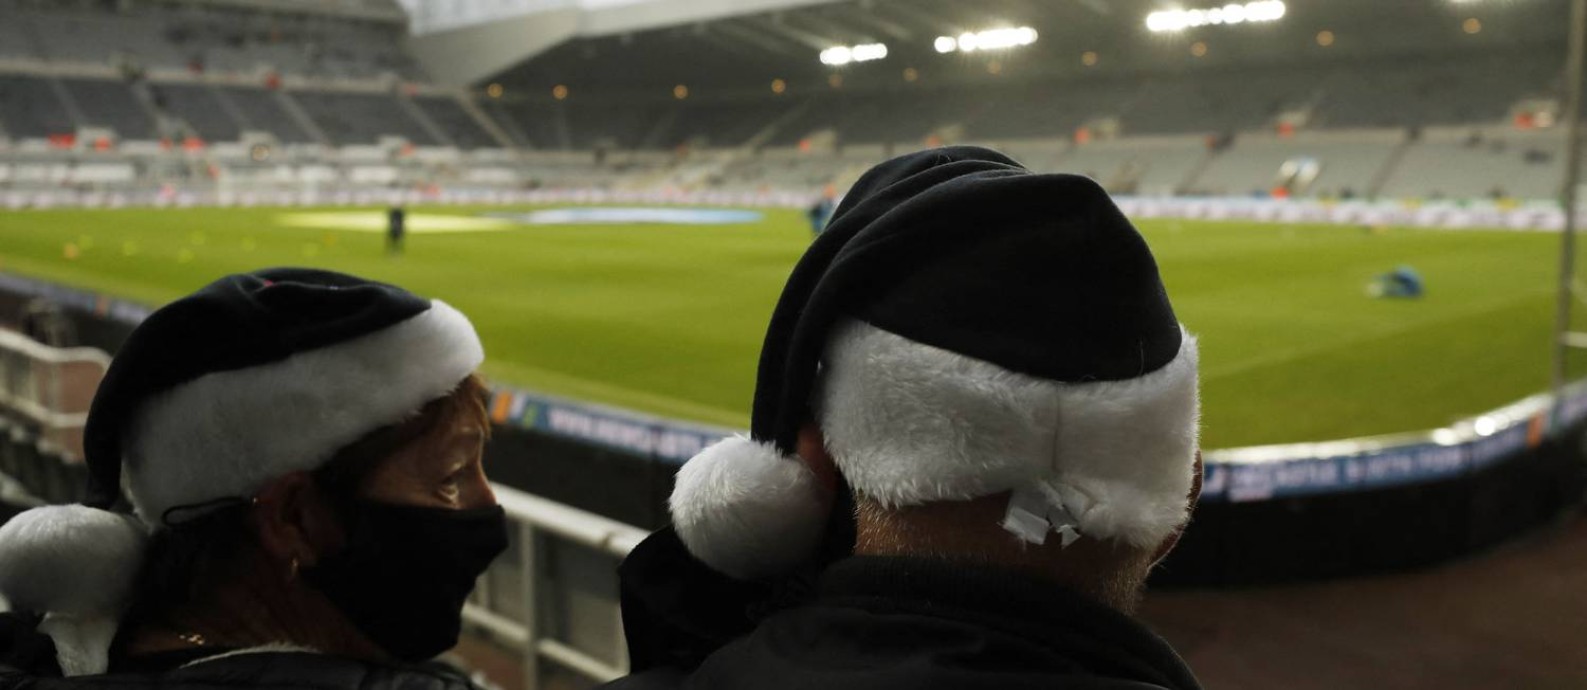 Boxing Day: rodada pós-Natal tem jogos adiados e cuidados ampliados na Premier League Foto: LEE SMITH / Action Images via Reuters